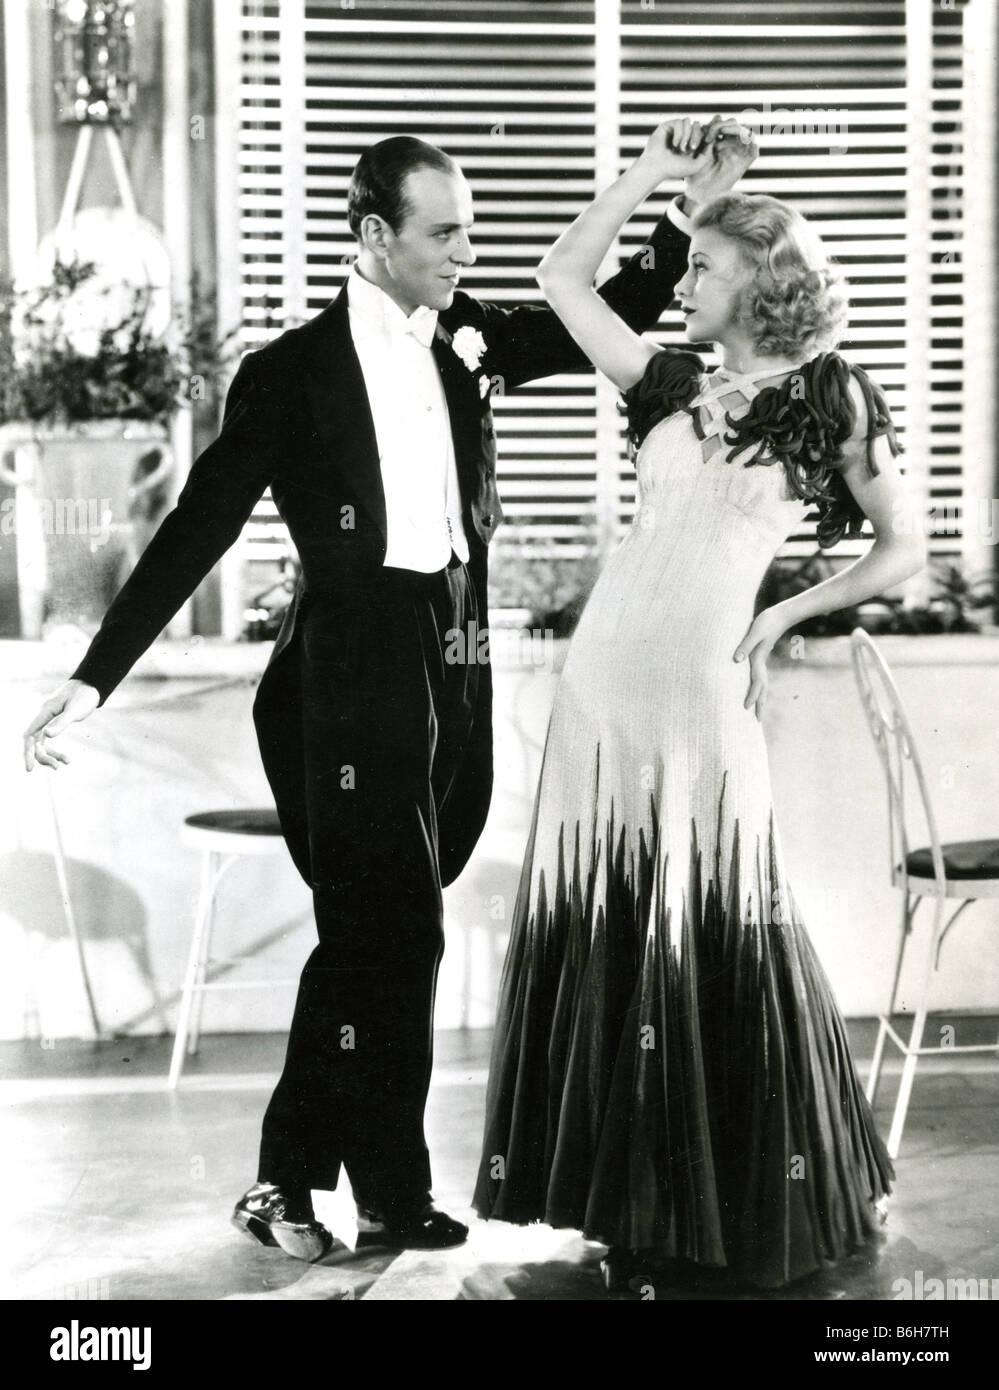 GAY DIVORCEE 1934 RKO Films mit Fred Astaire und Ginger Rogers  Stockfotografie - Alamy